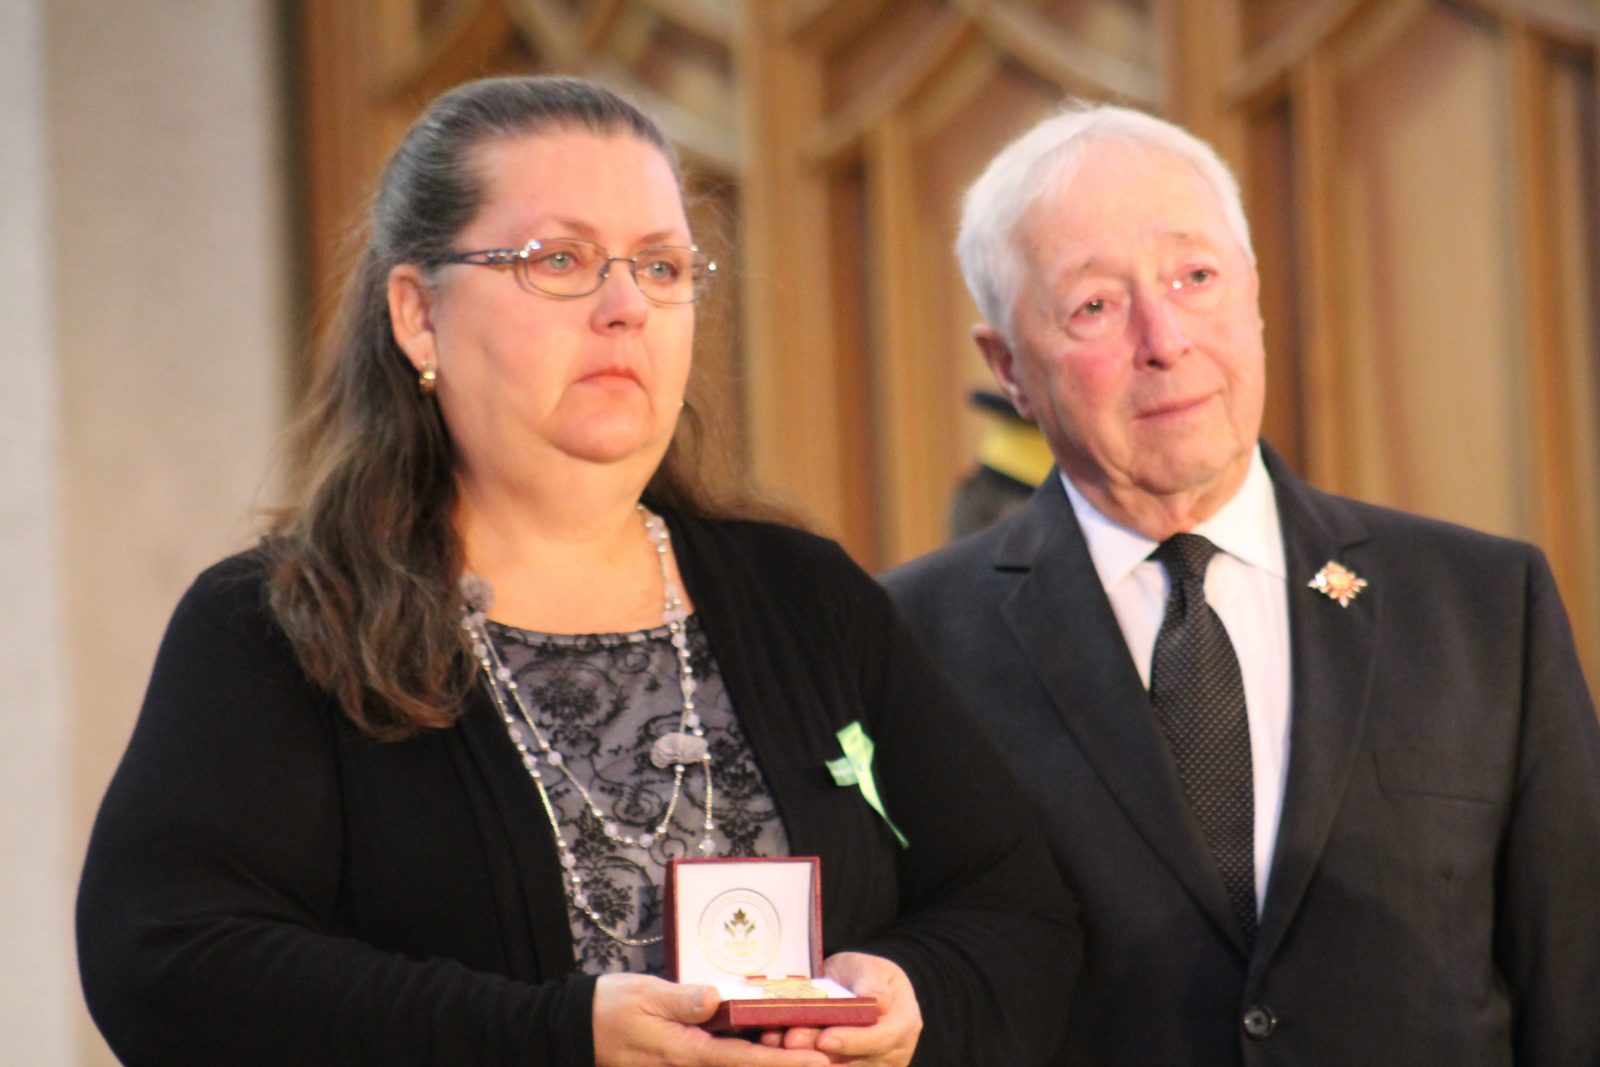 Organ donors honoured as “ambassadors of health”